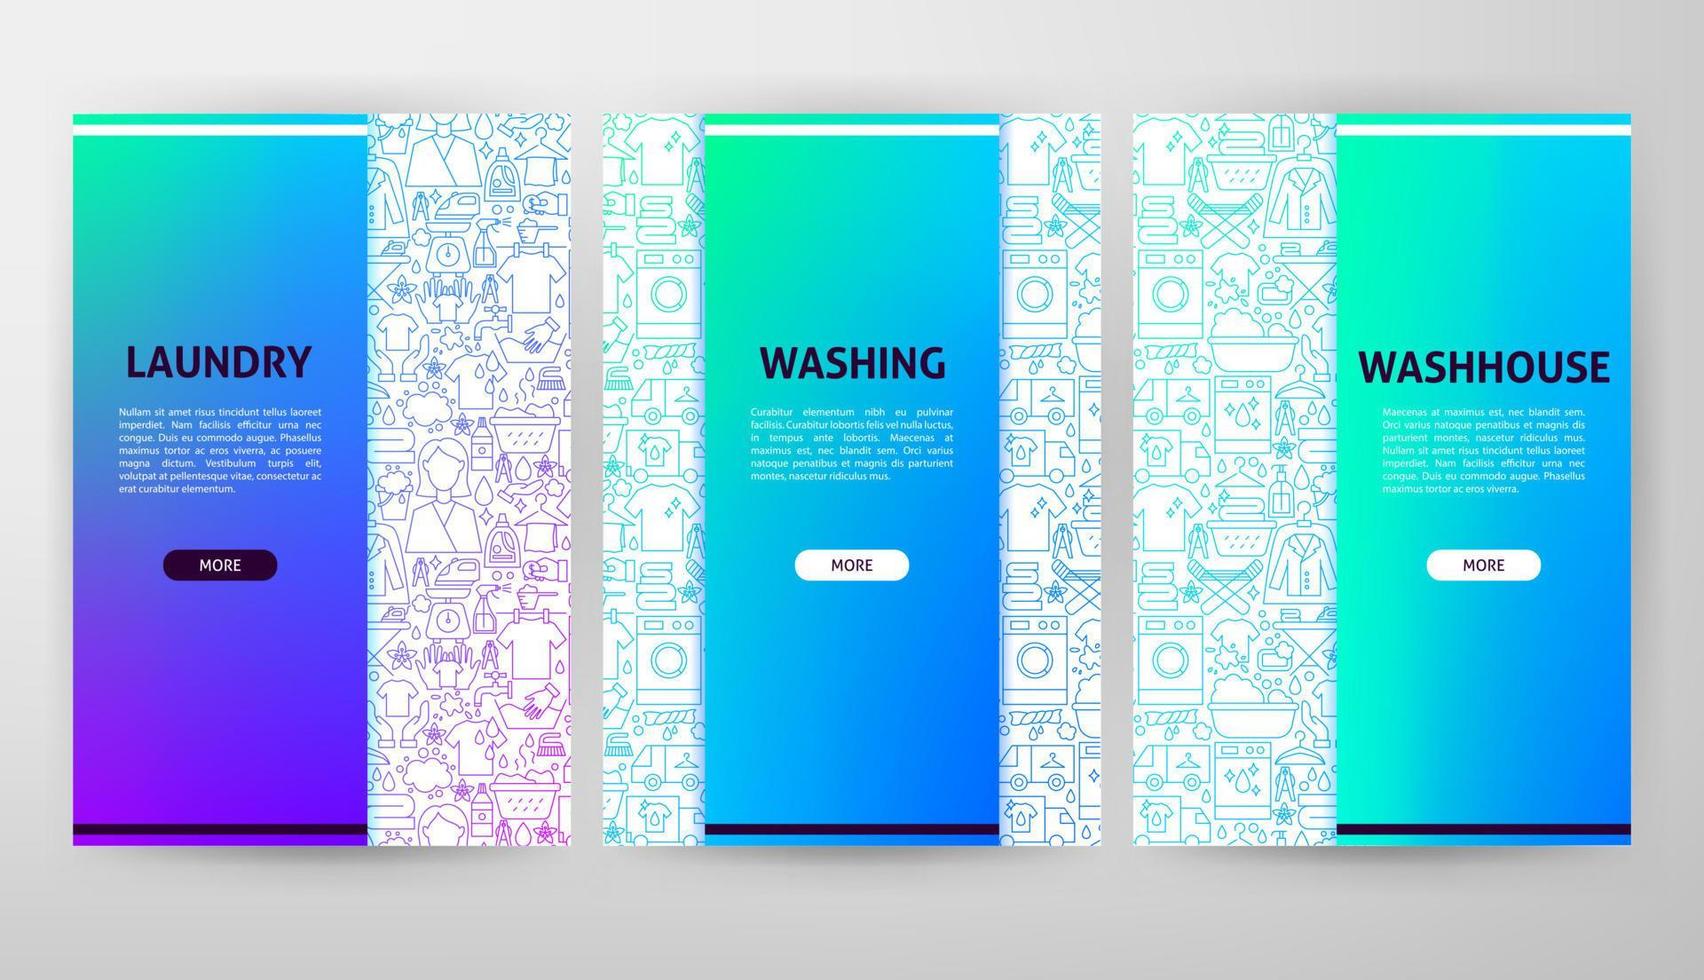 Laundry Web Design vector